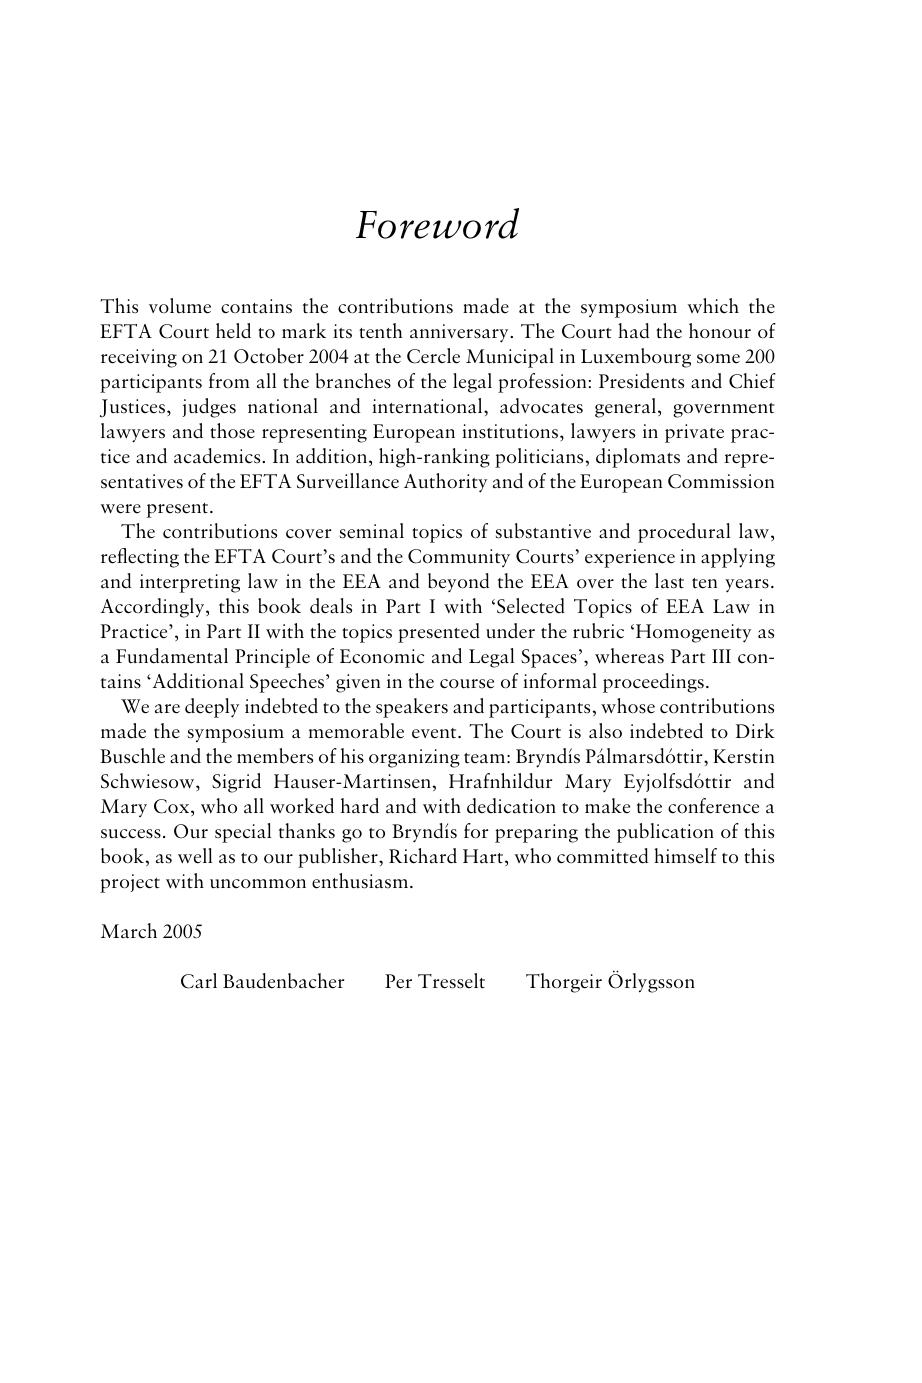 The EFTA Court: Ten Years On by Carl Baudenbacher; Per Tresselt; Thorgeir Orlygsson (editors)